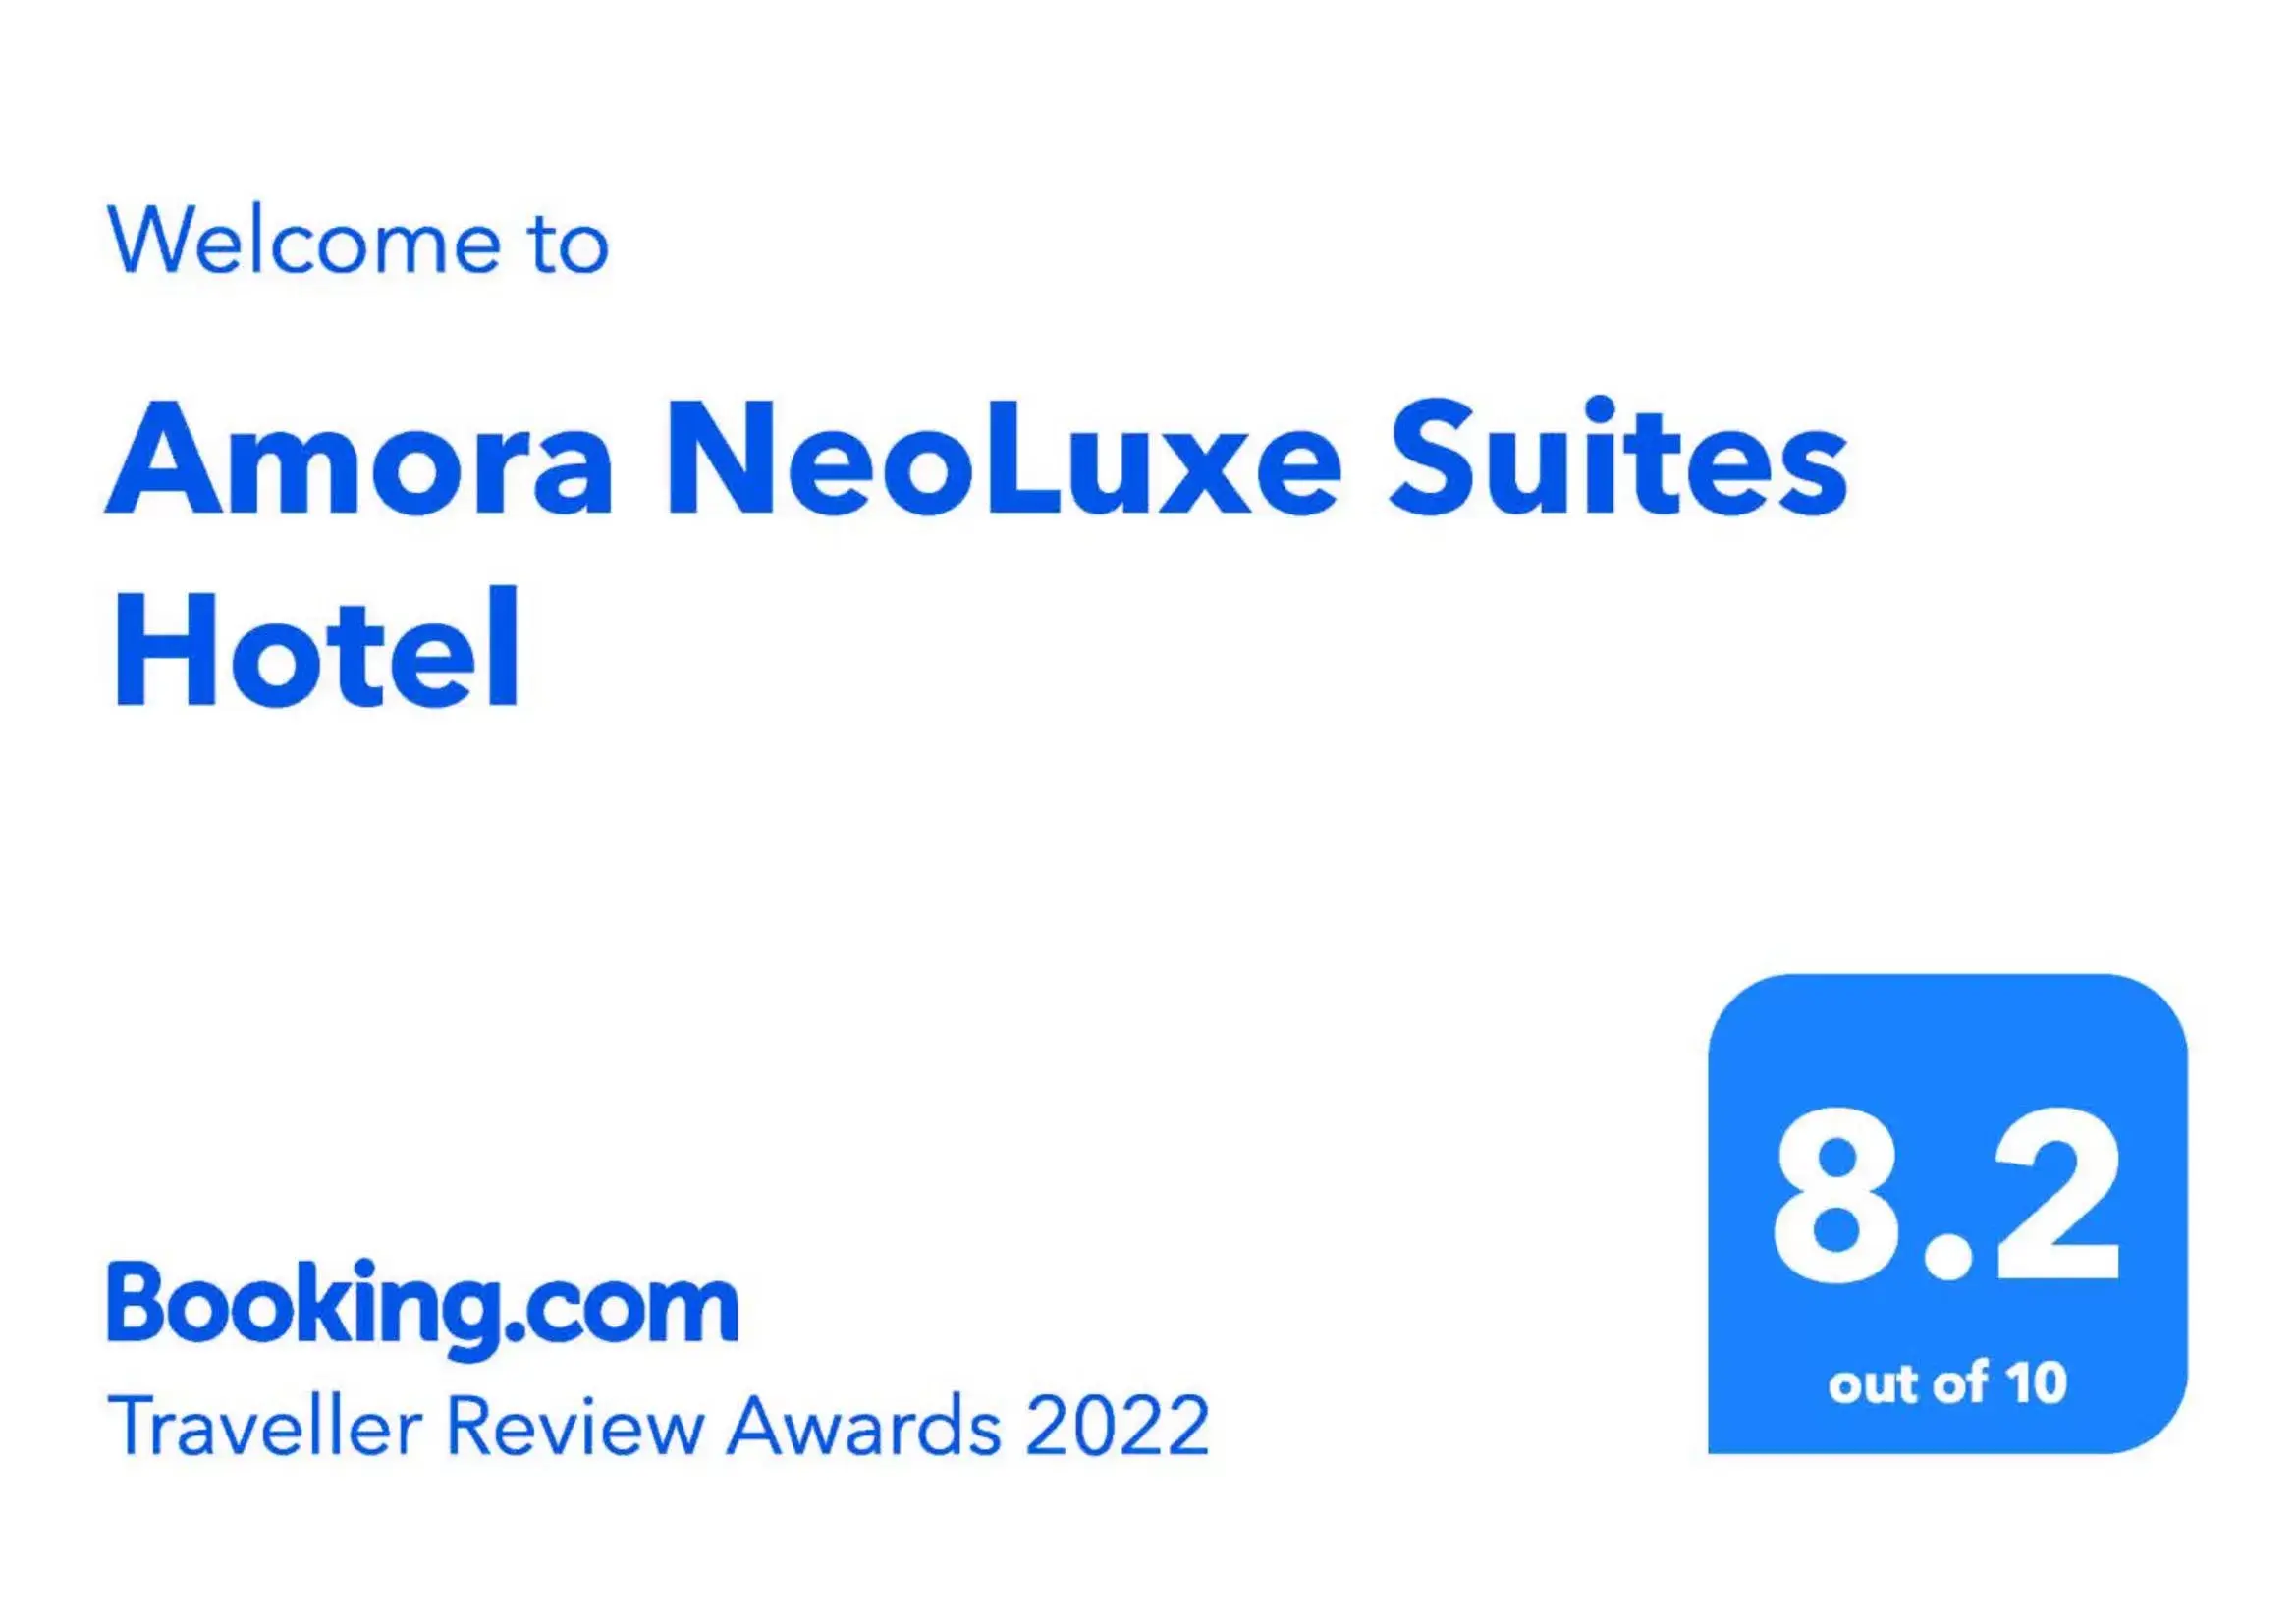 Certificate/Award in Amora NeoLuxe Suites Hotel